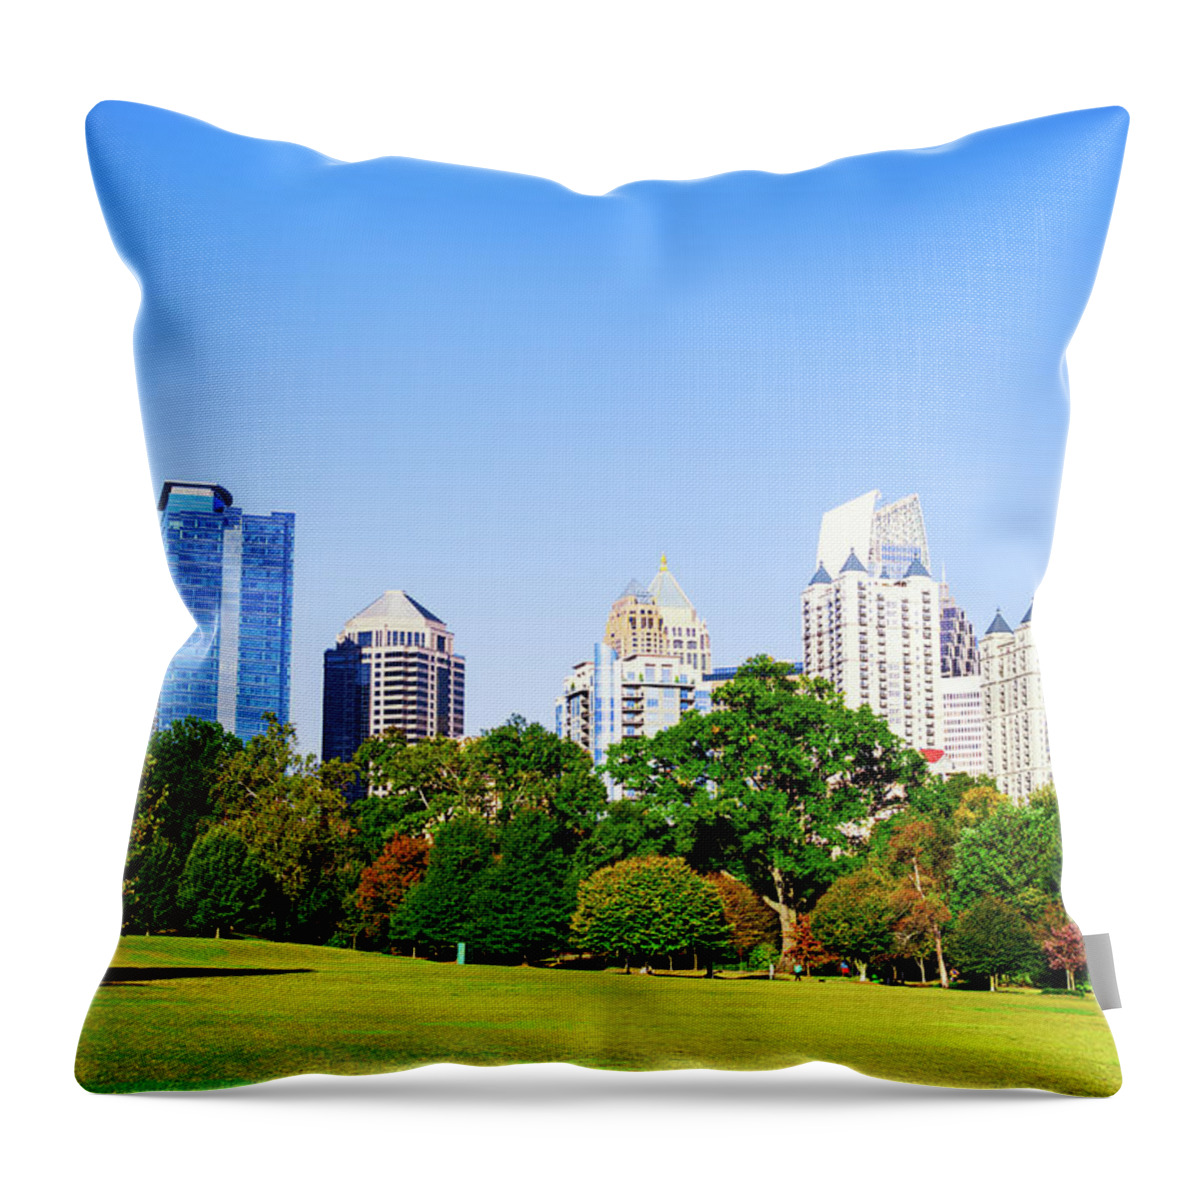 Atlanta Throw Pillow featuring the photograph Atlanta Skyline, Piedmont Park by Moreiso